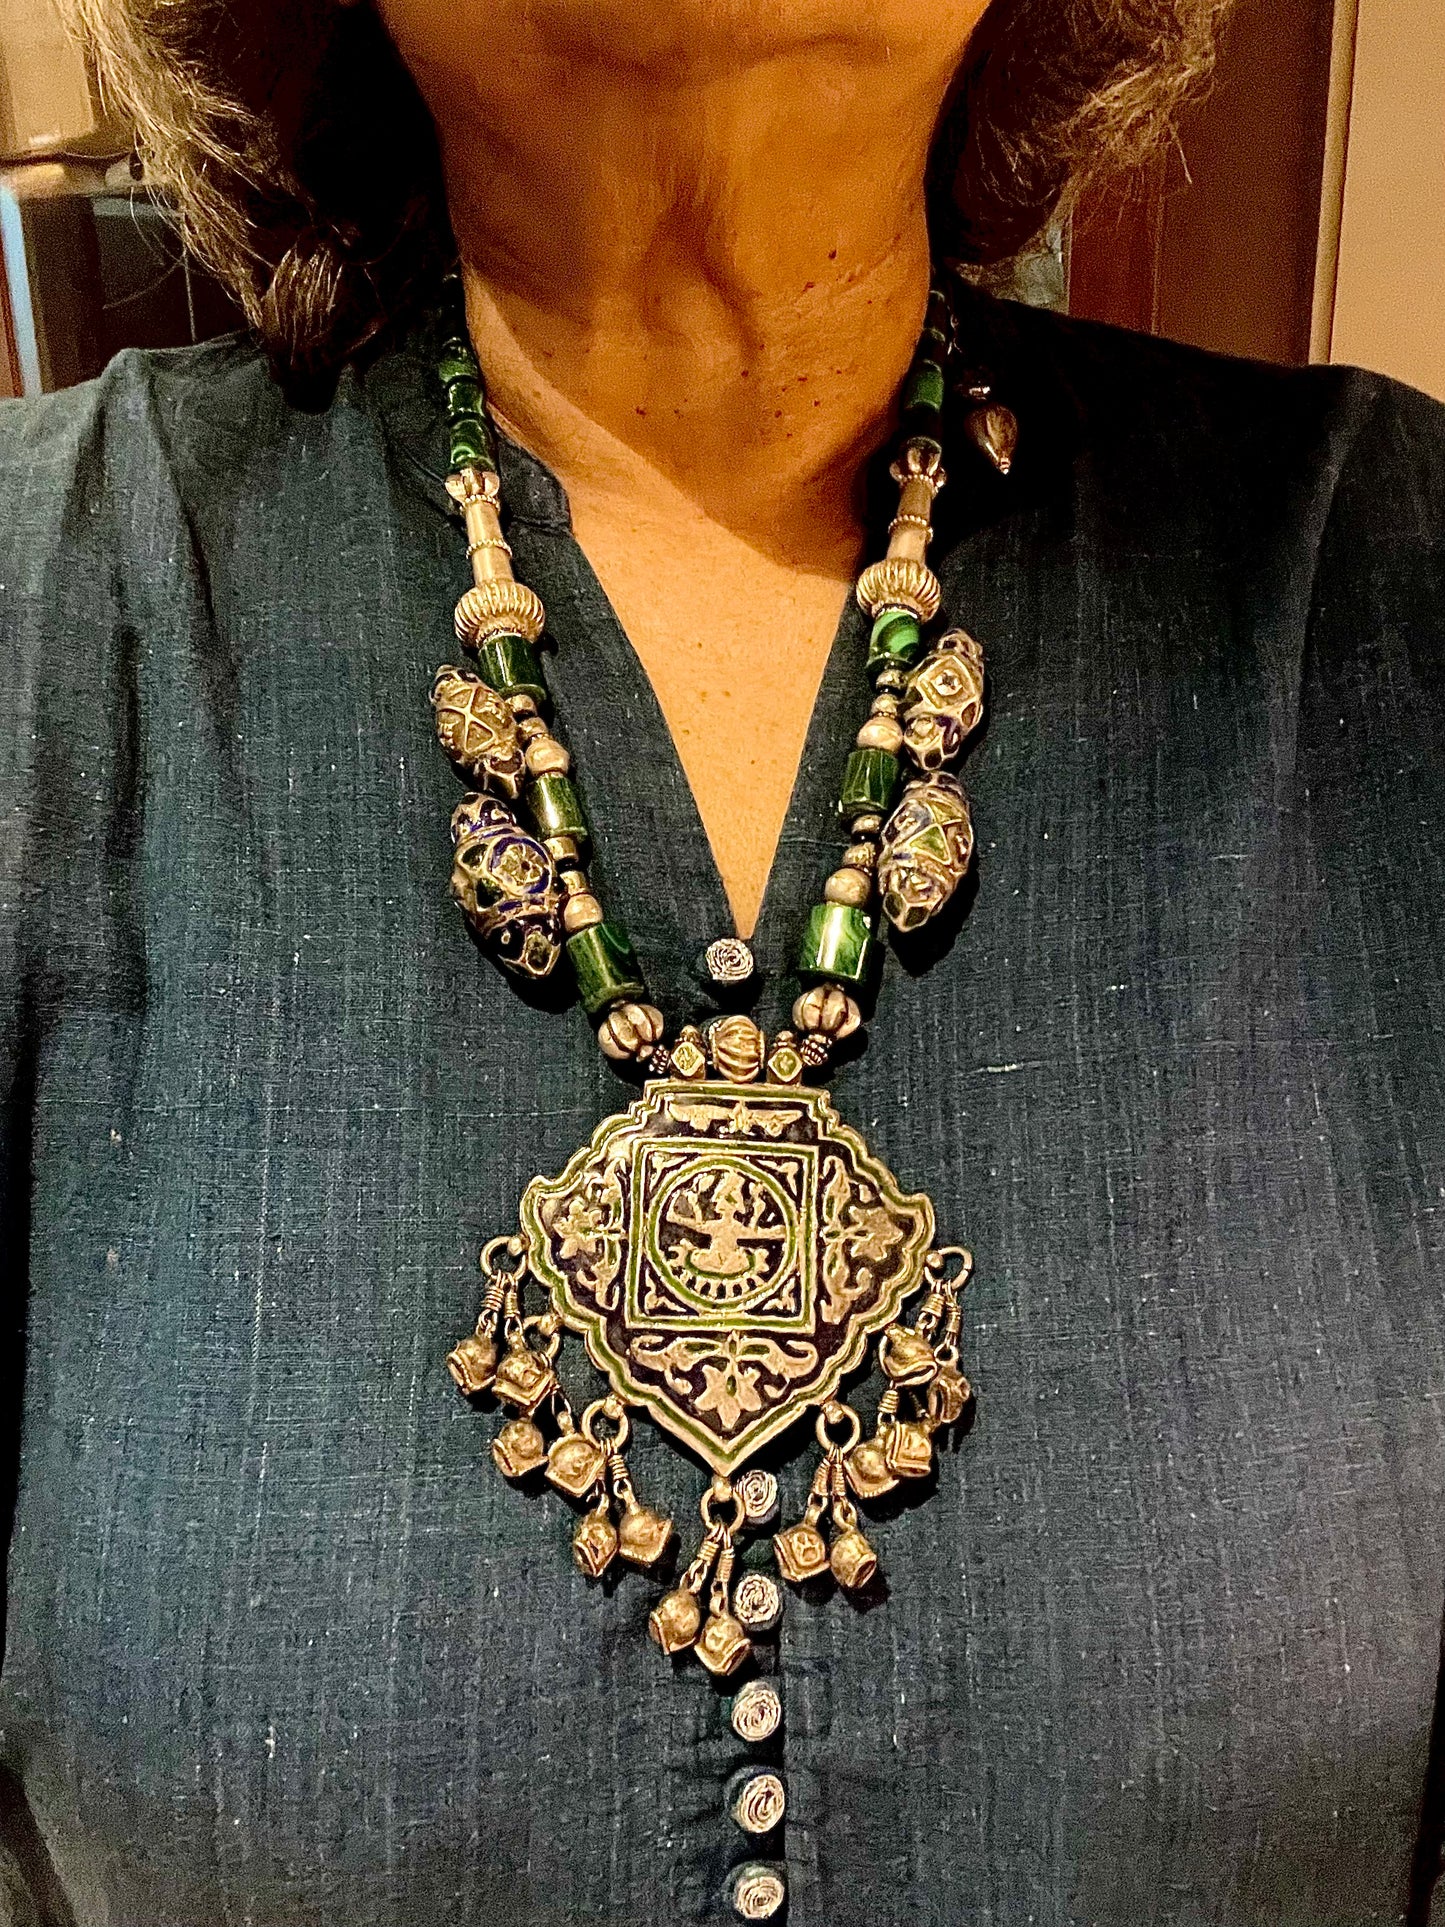 Enamel pendant necklace from Himachal Pradesh